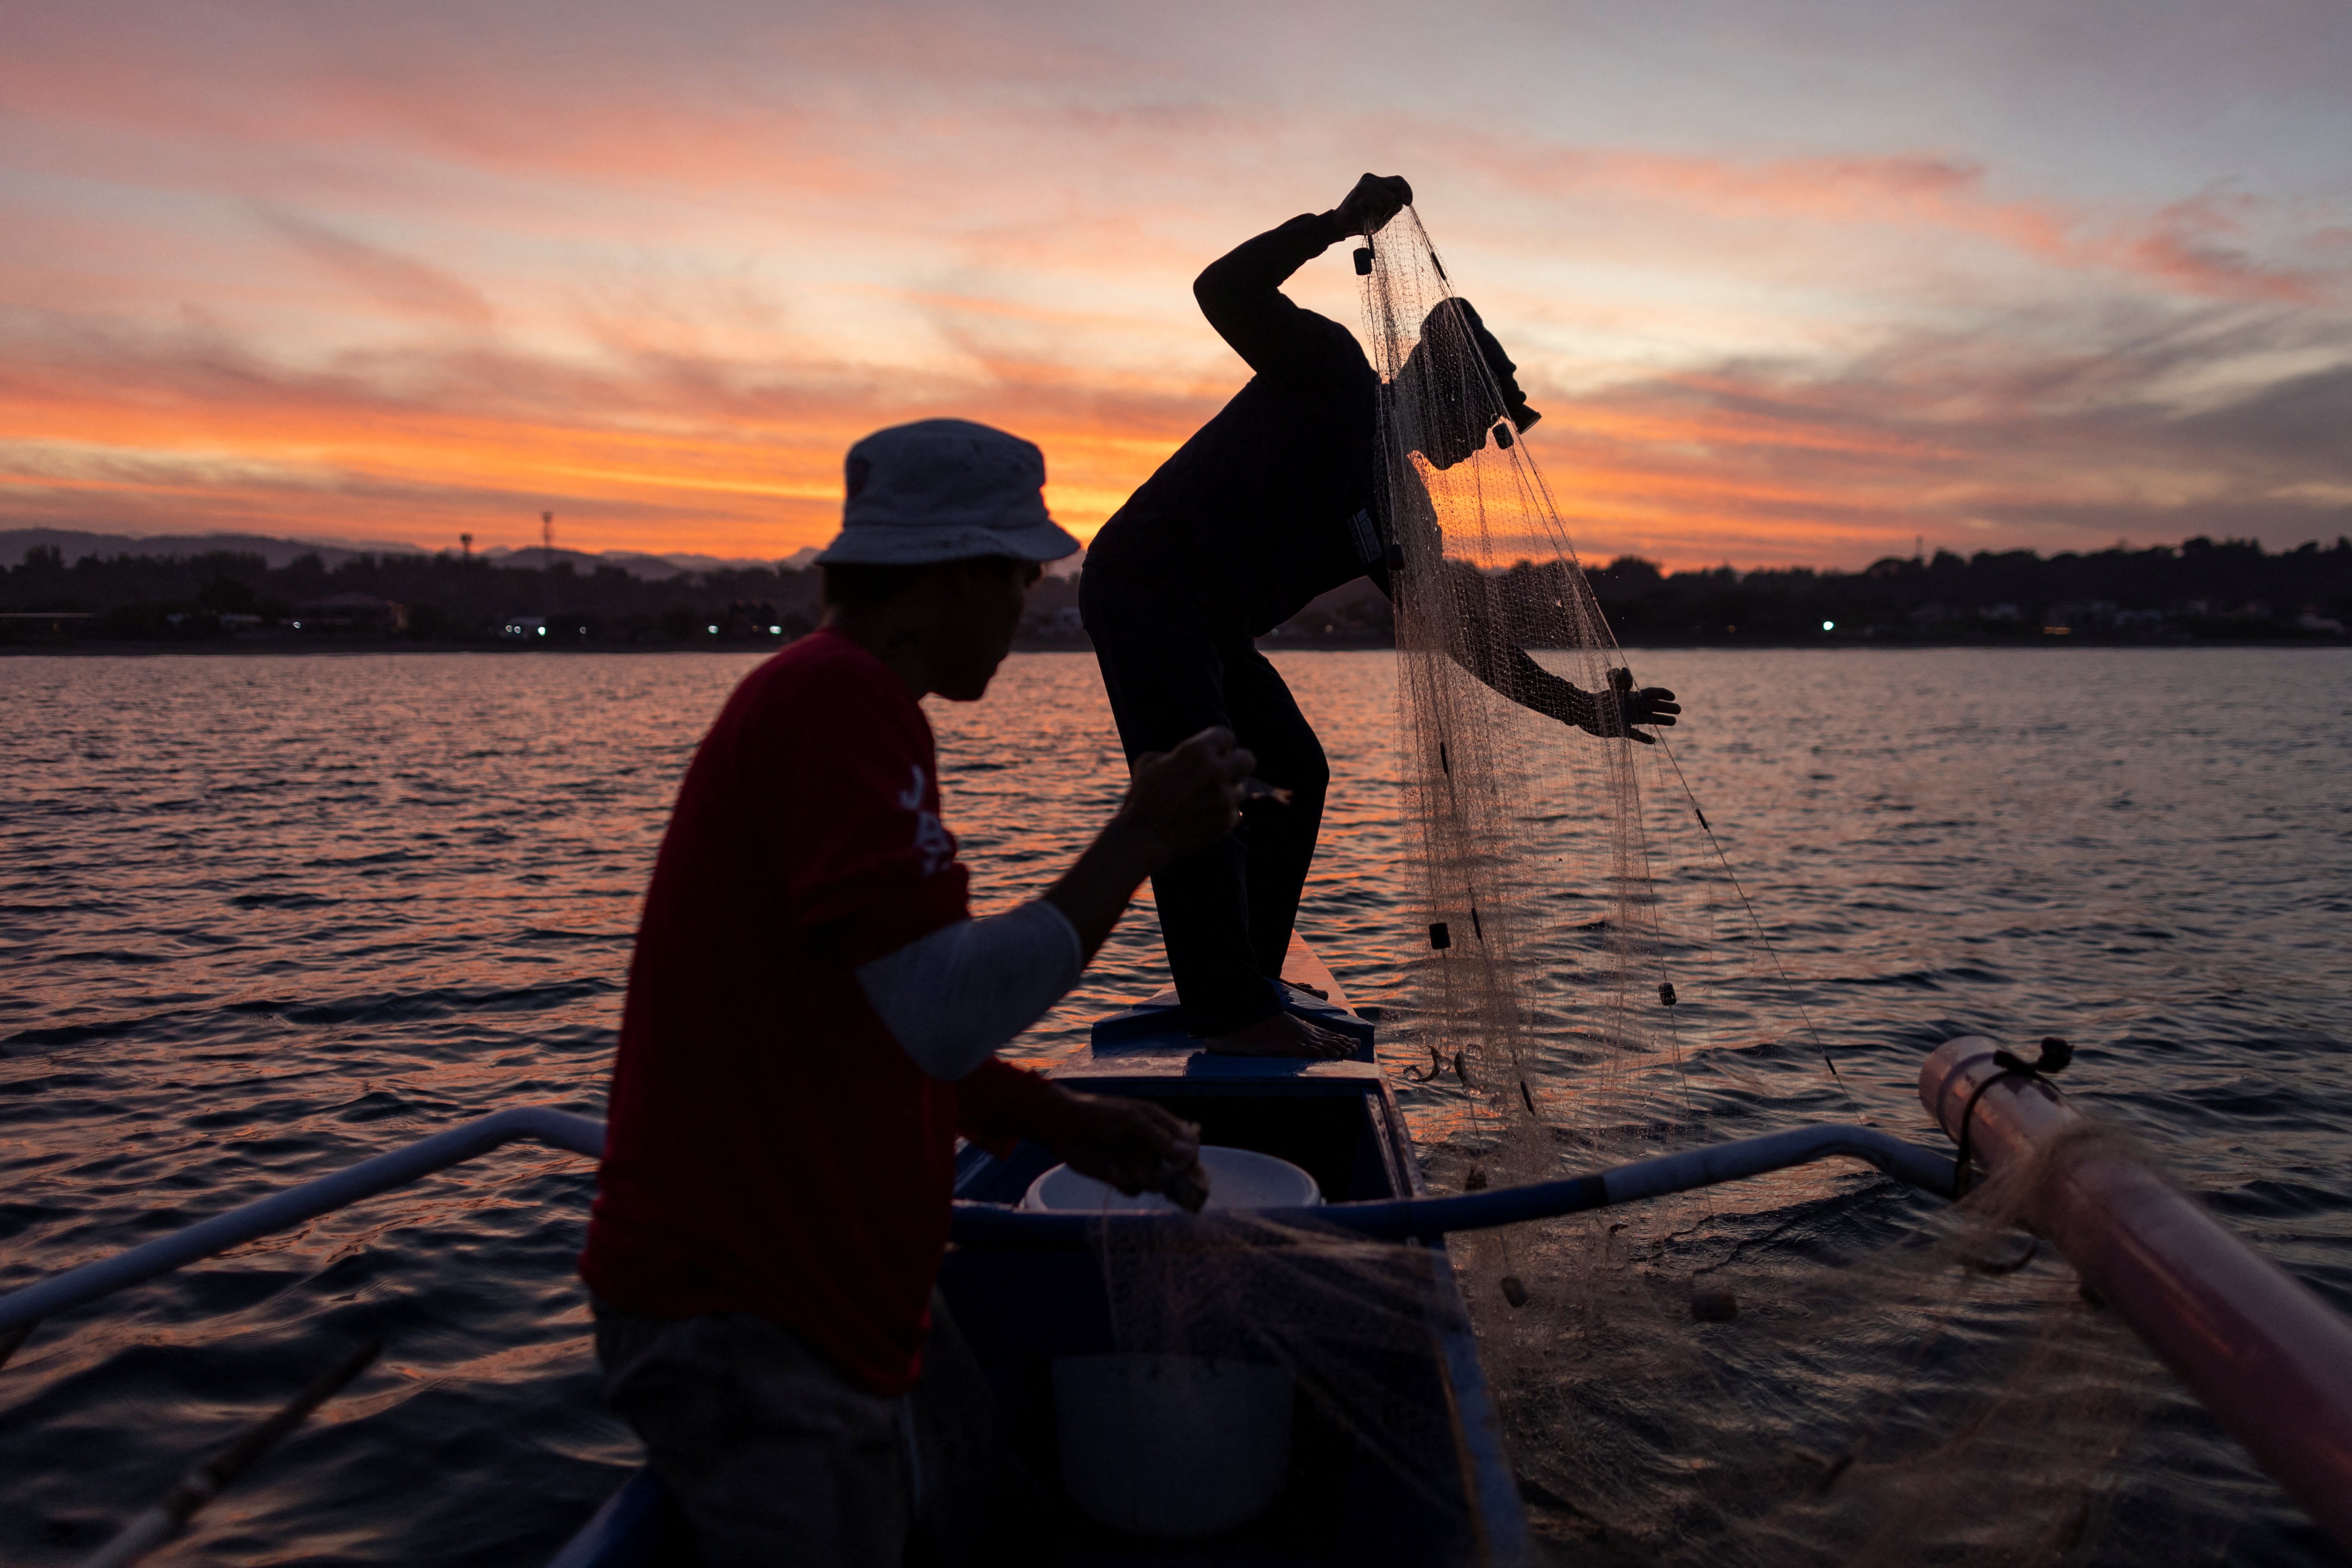 Jessie hauls his fishing net on his boat in Bacnotan, La Union